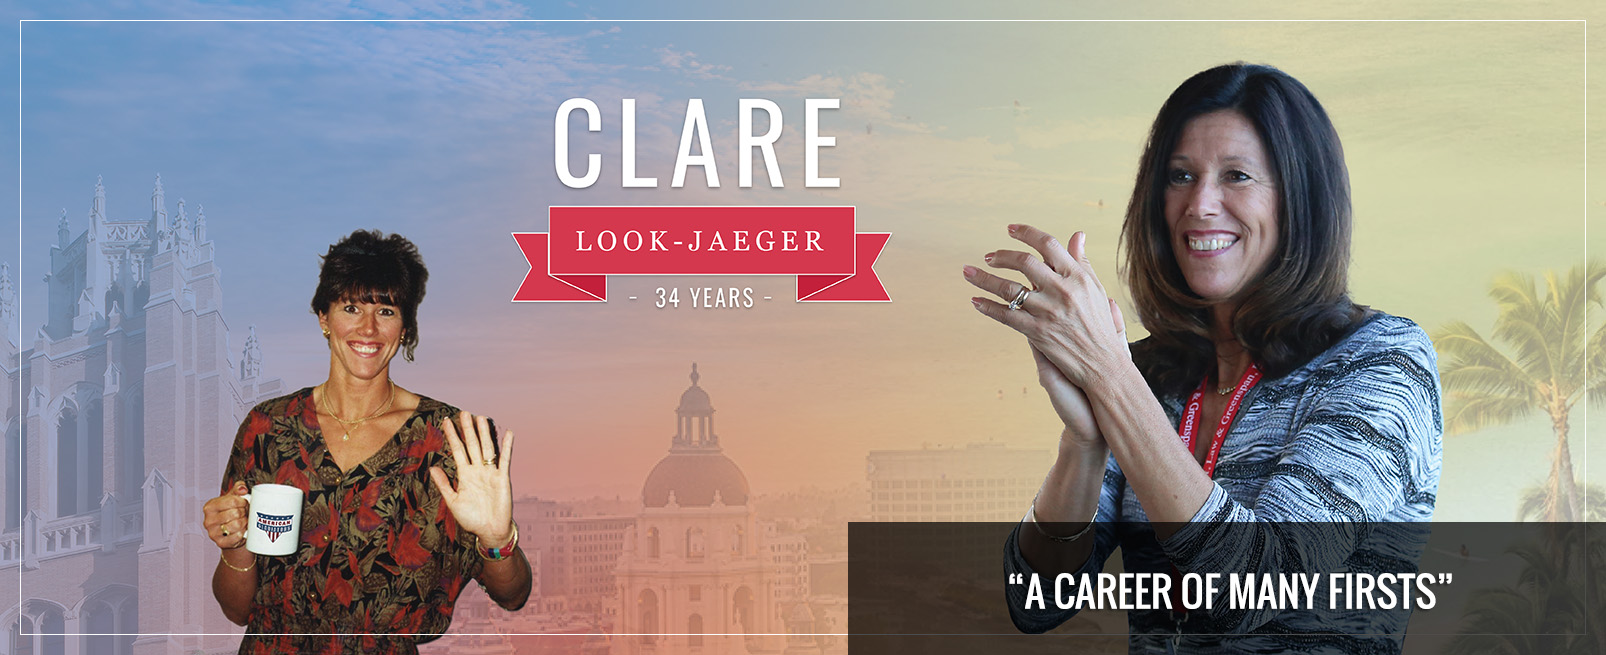 Clare Look Jaeger